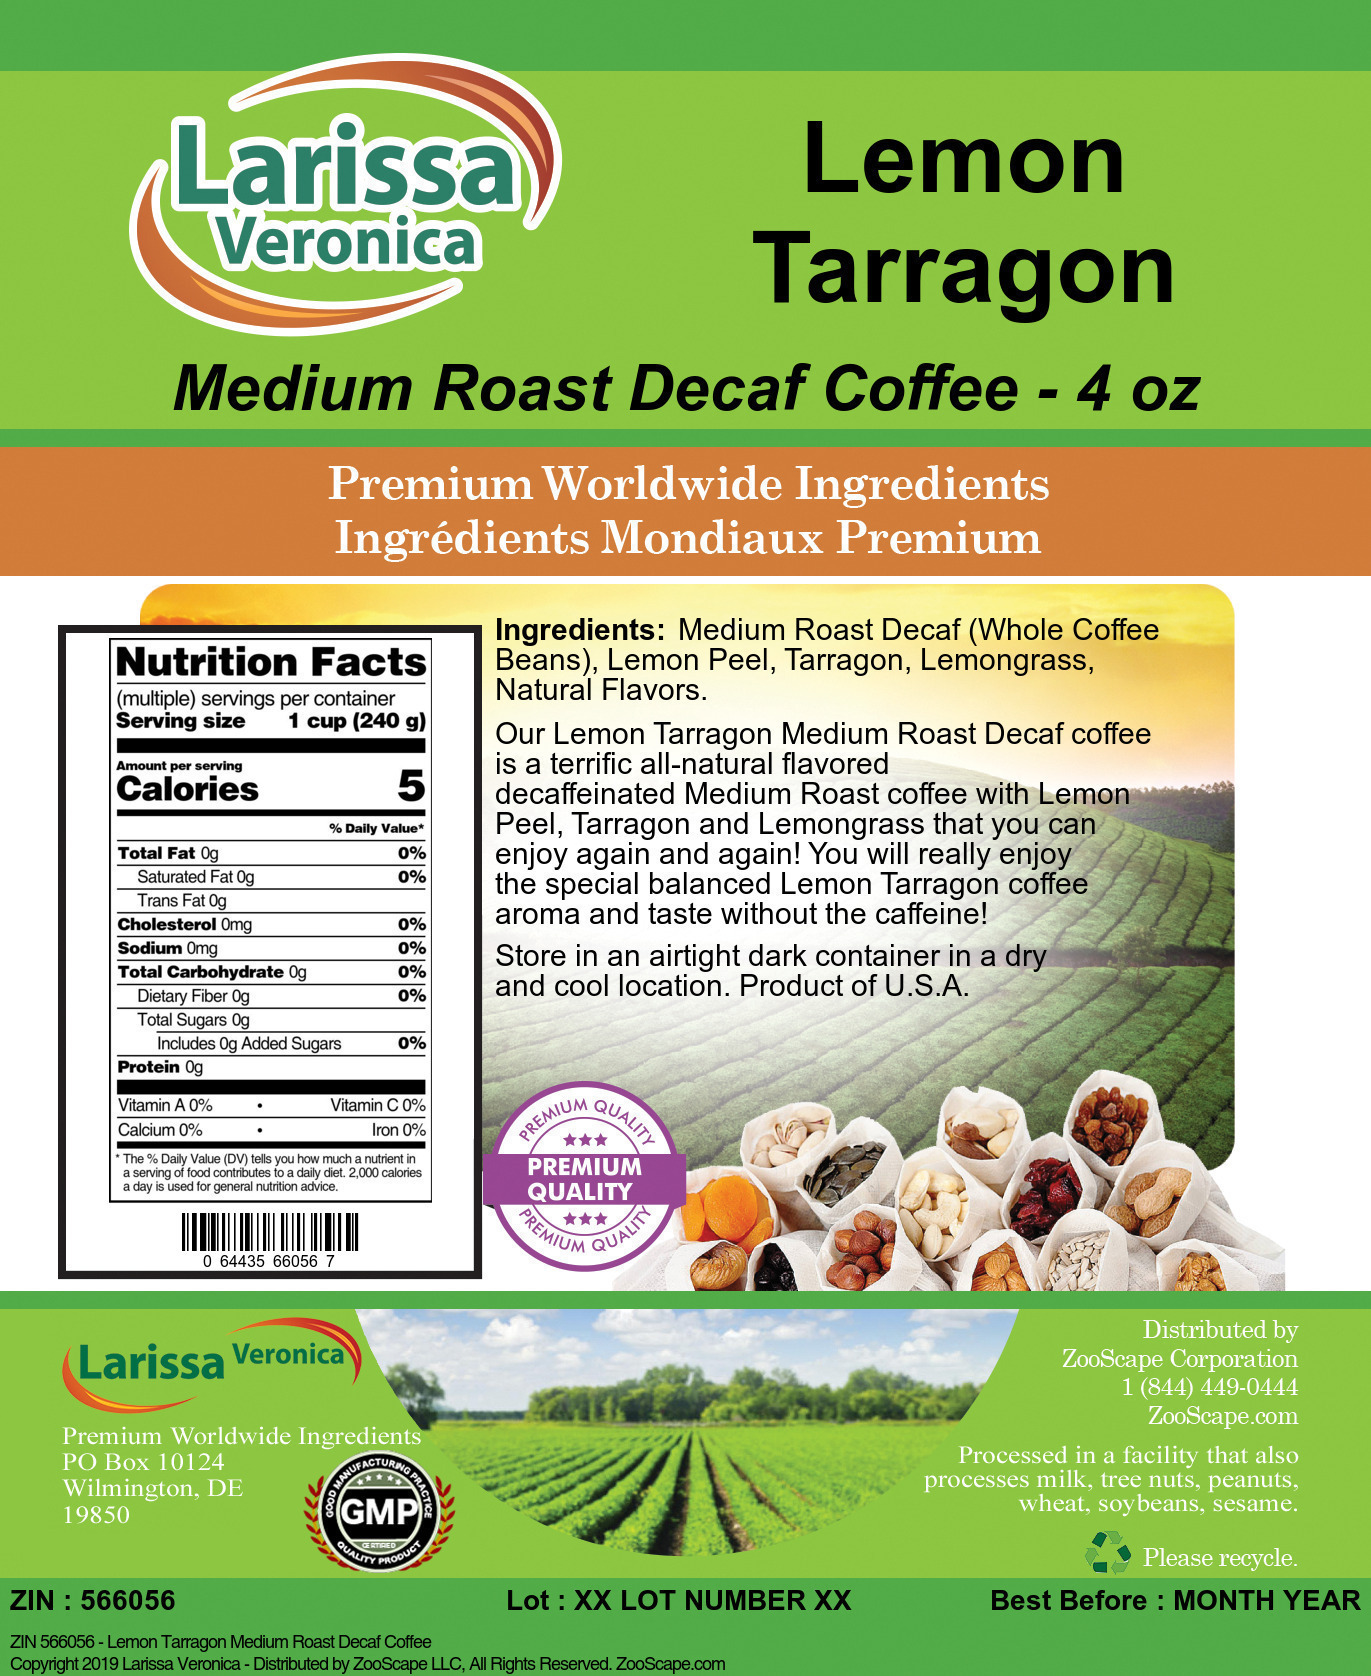 Lemon Tarragon Medium Roast Decaf Coffee - Label